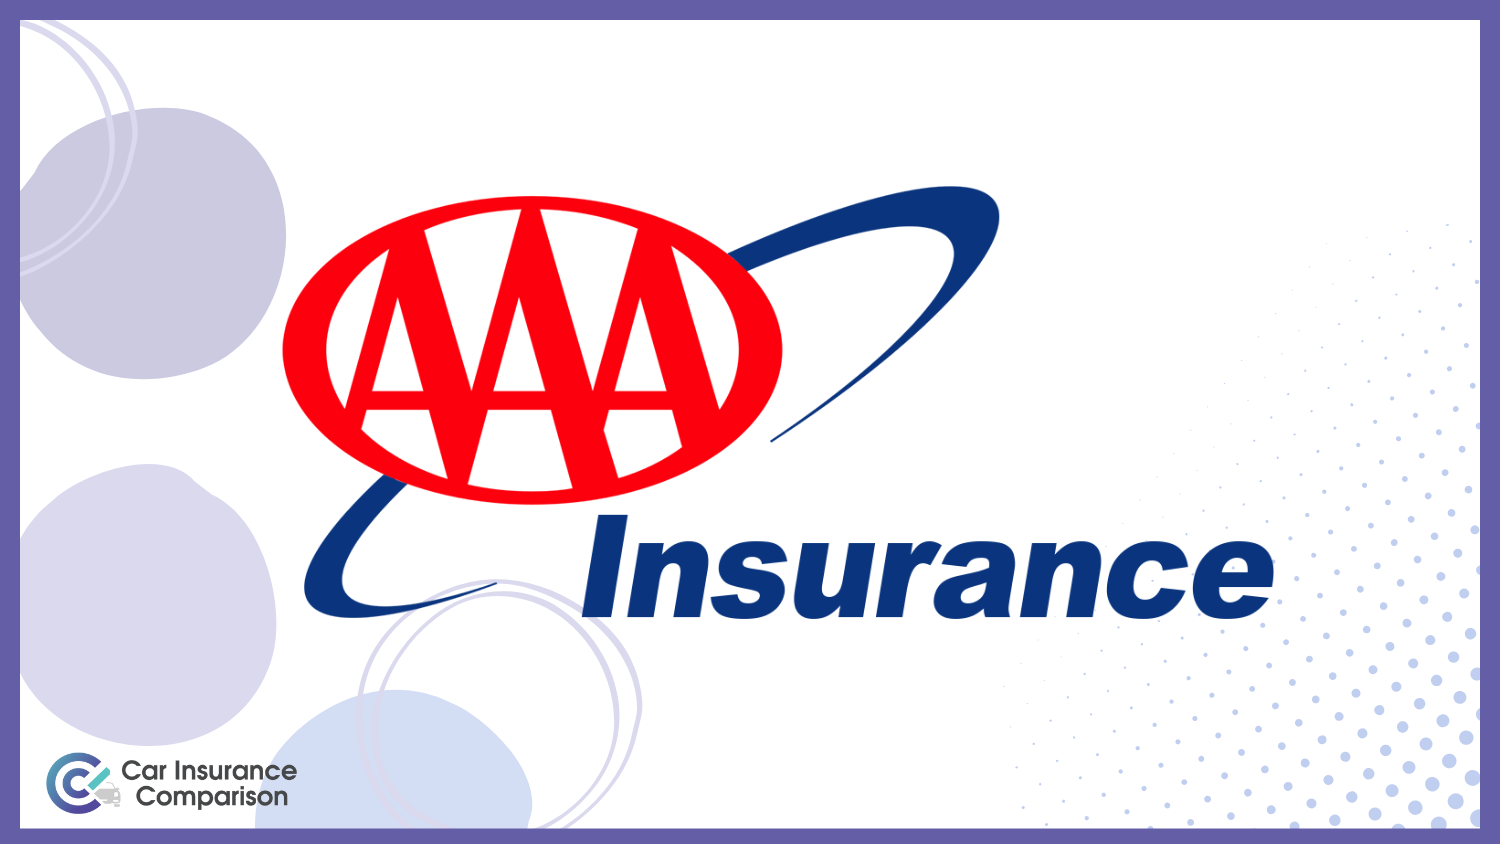 Cheap Mexican Car Insurance: AAA